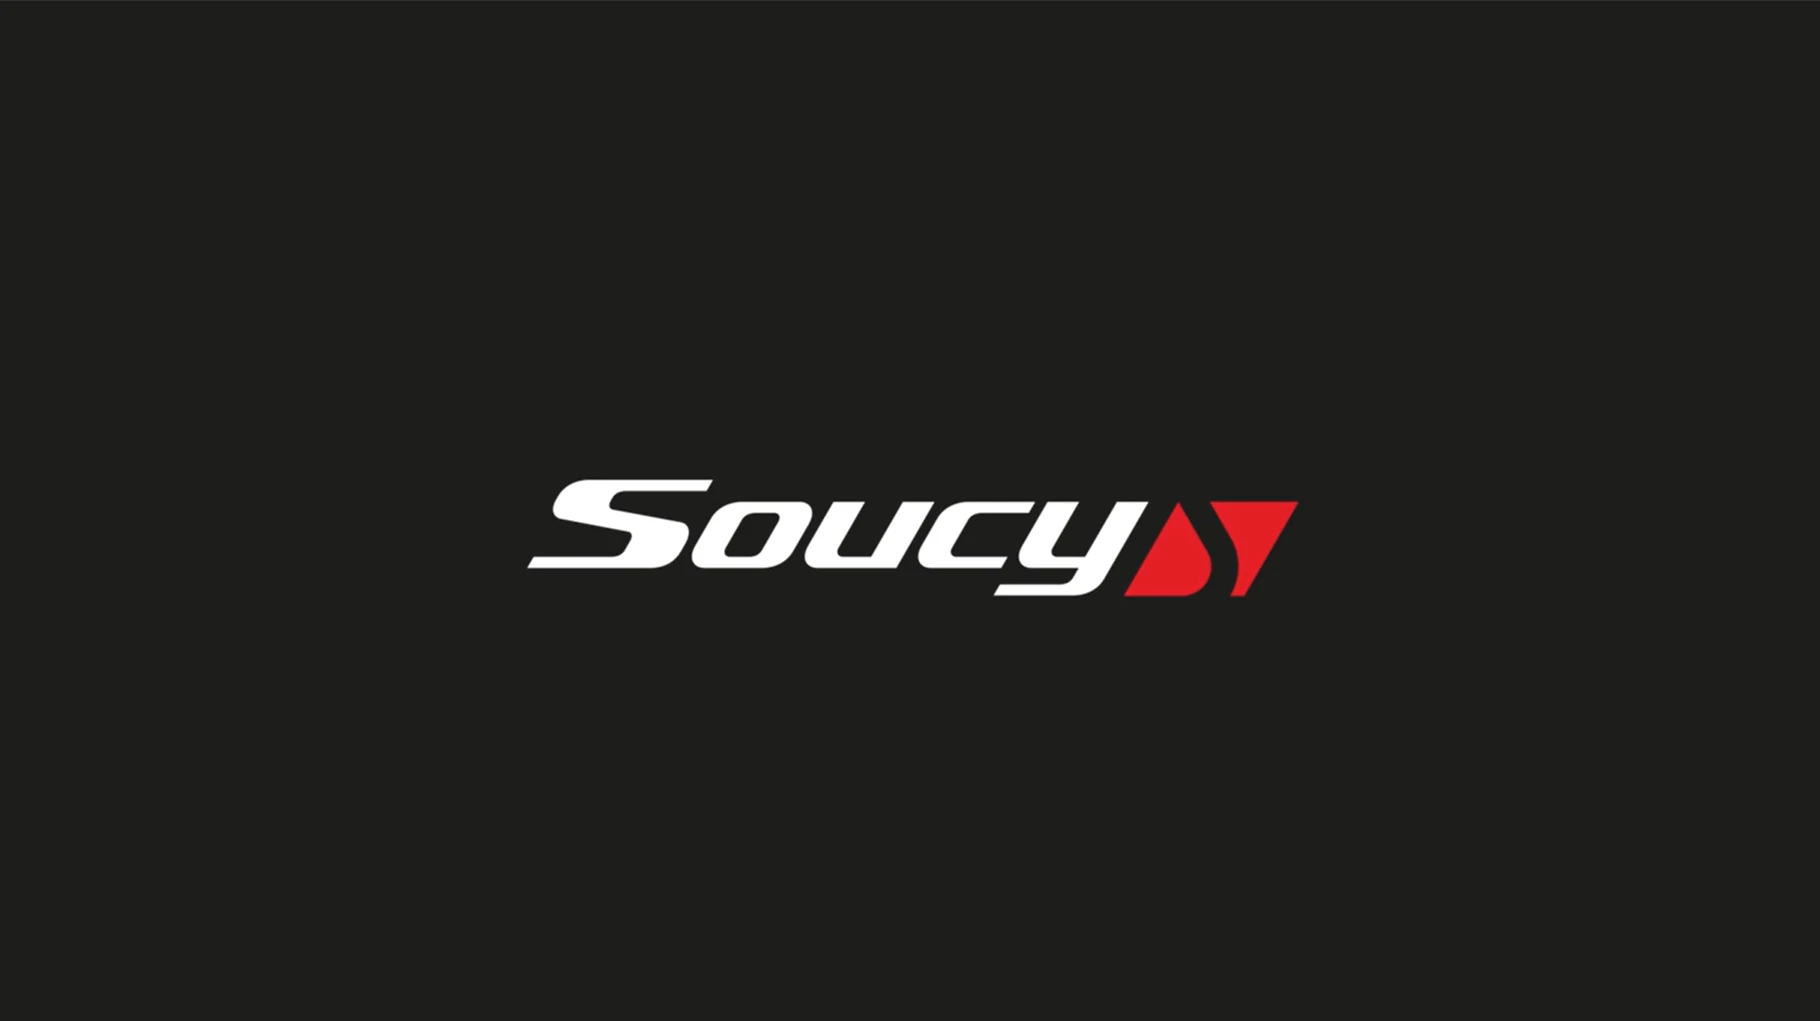 Soucy logo video